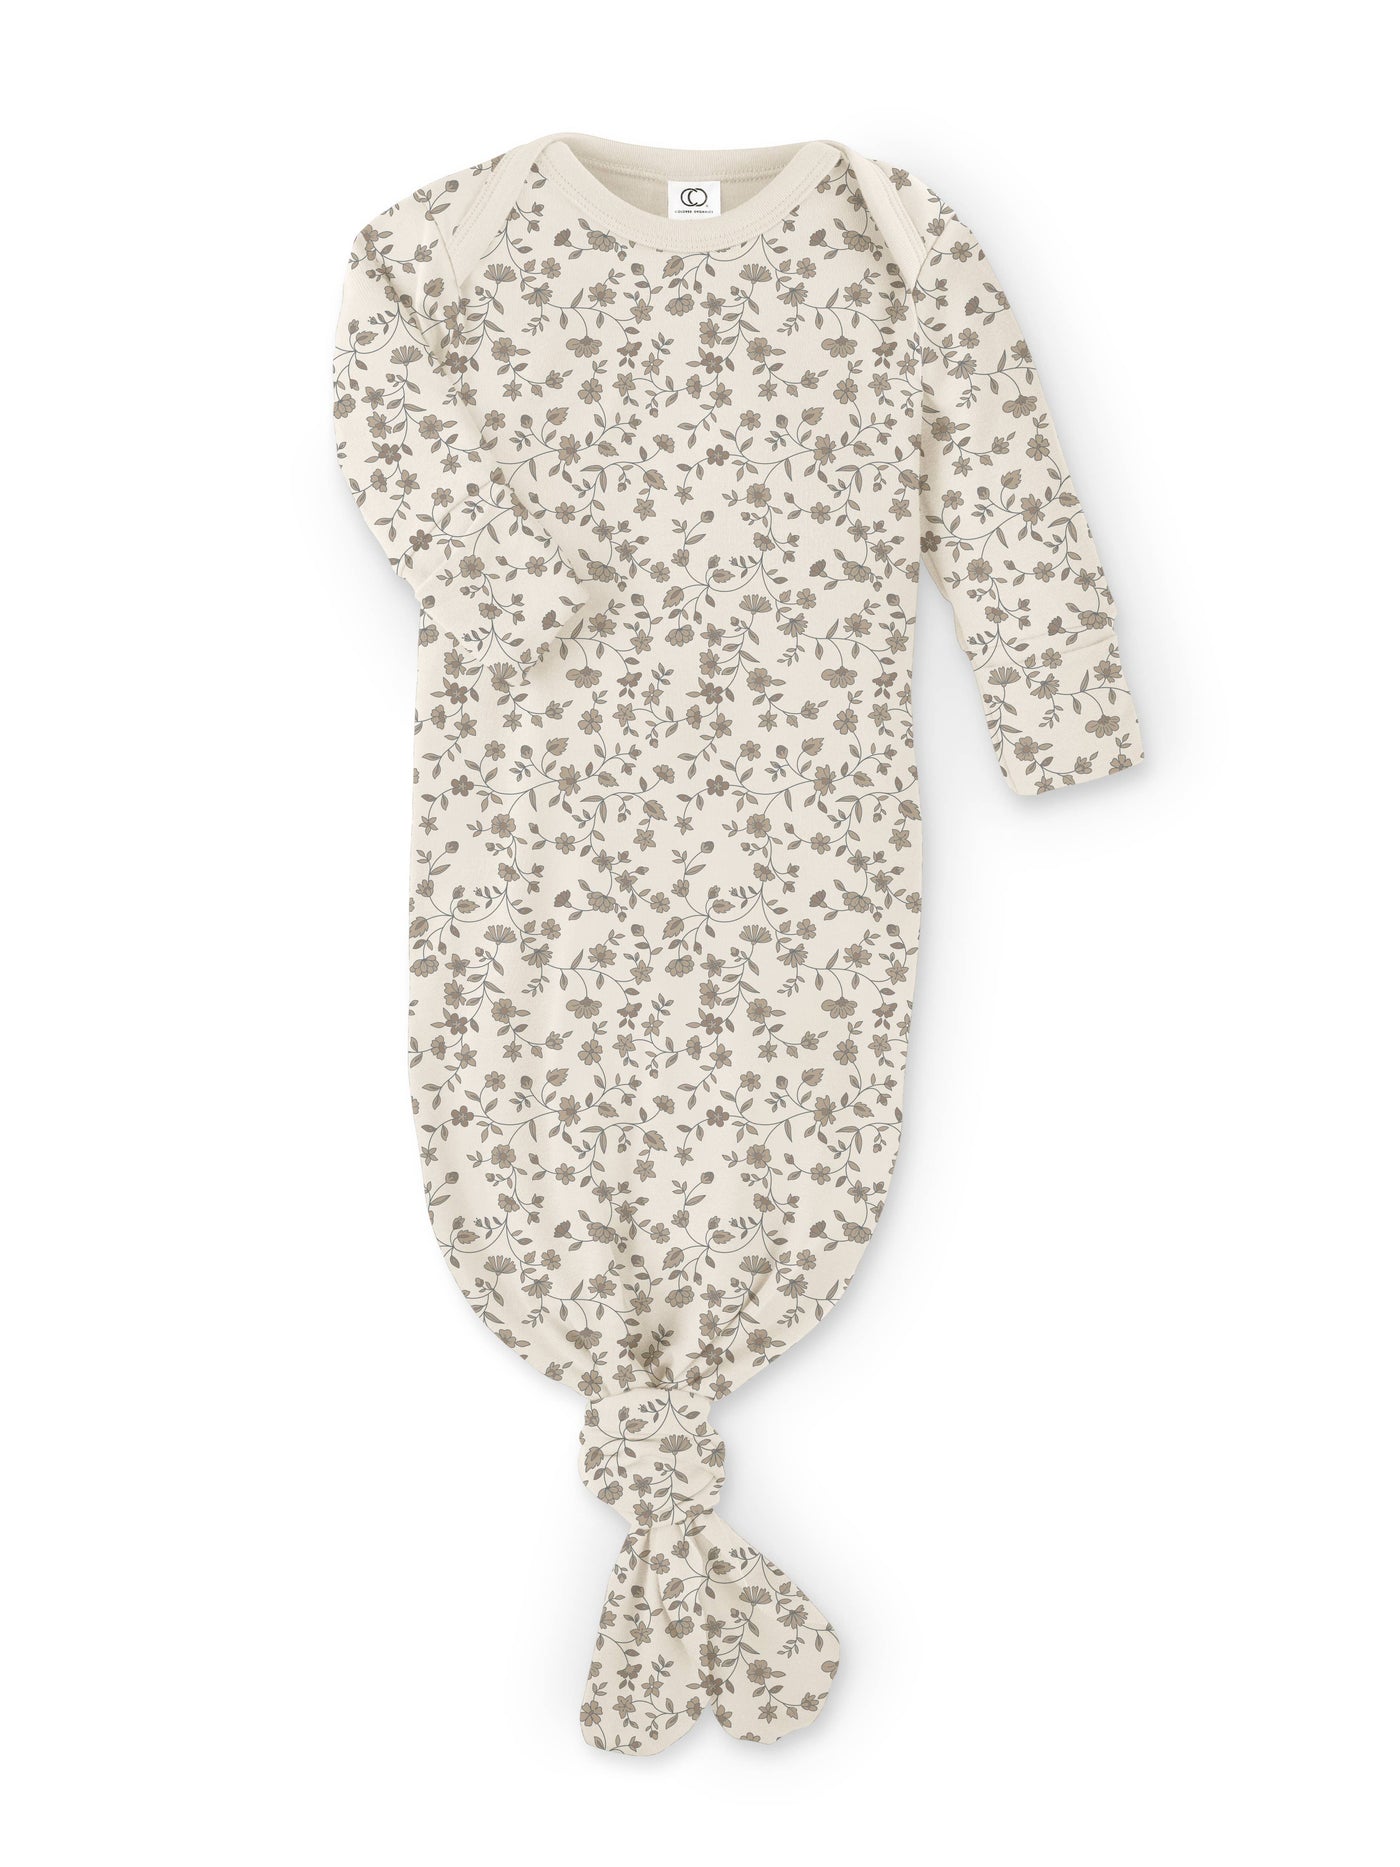 Landry Infant Gown - Pip Vine / Truffle - 0-3 M